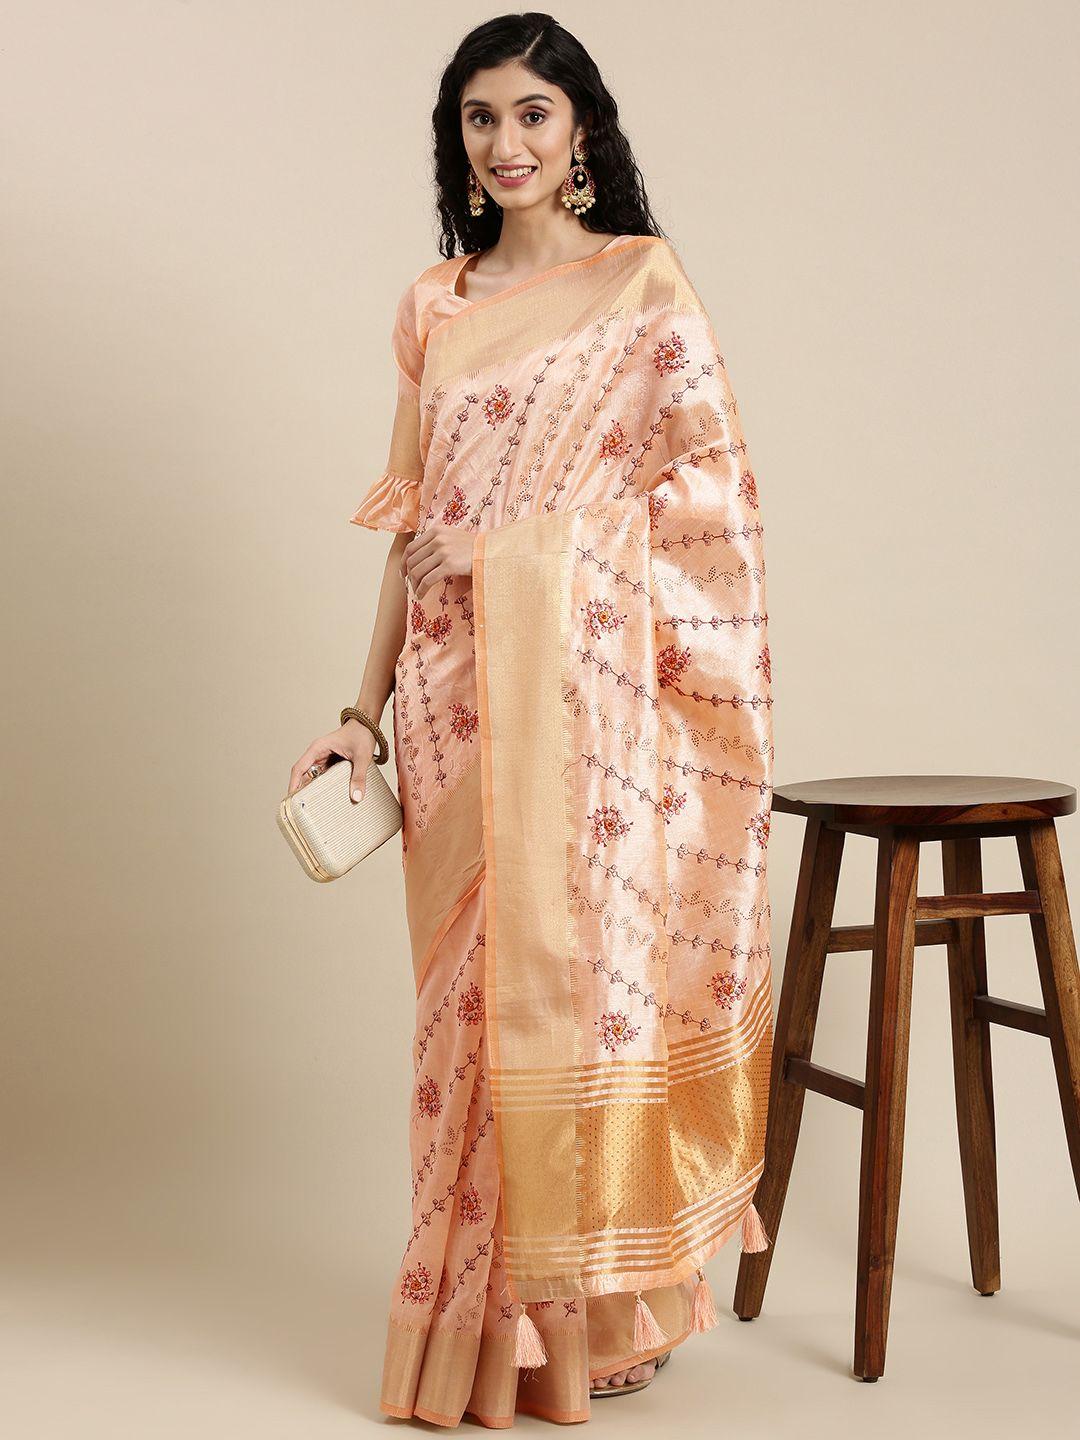 mitera peach-coloured floral embroidered saree